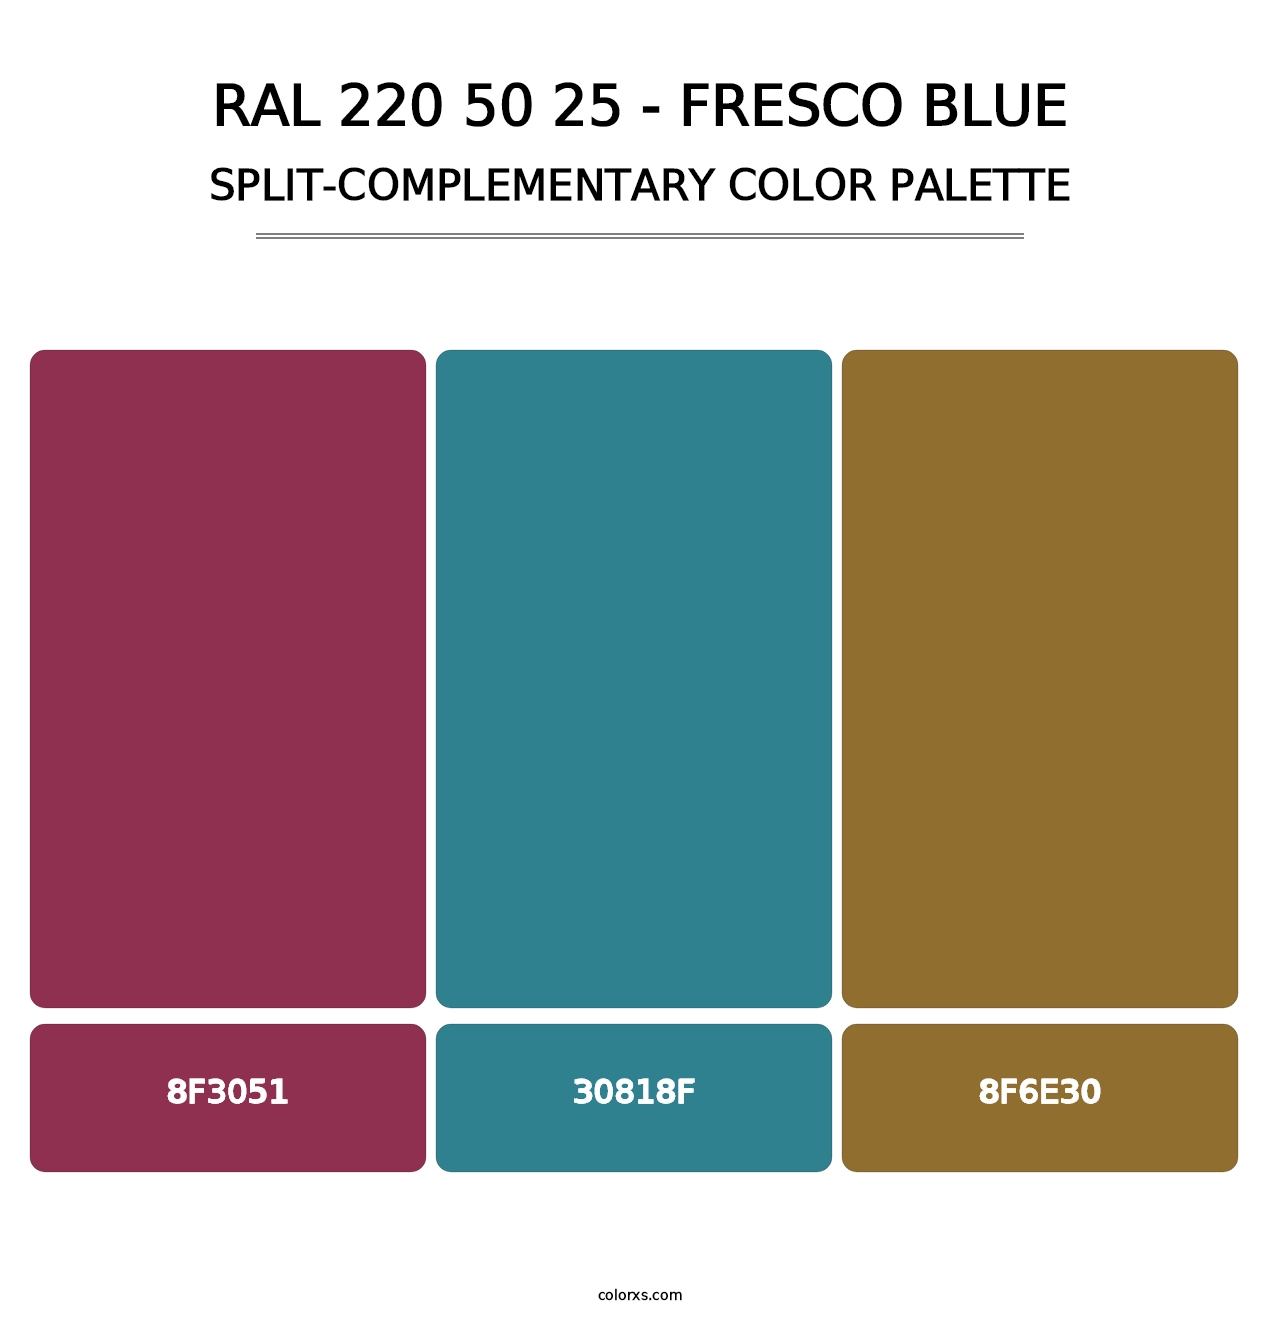 RAL 220 50 25 - Fresco Blue - Split-Complementary Color Palette